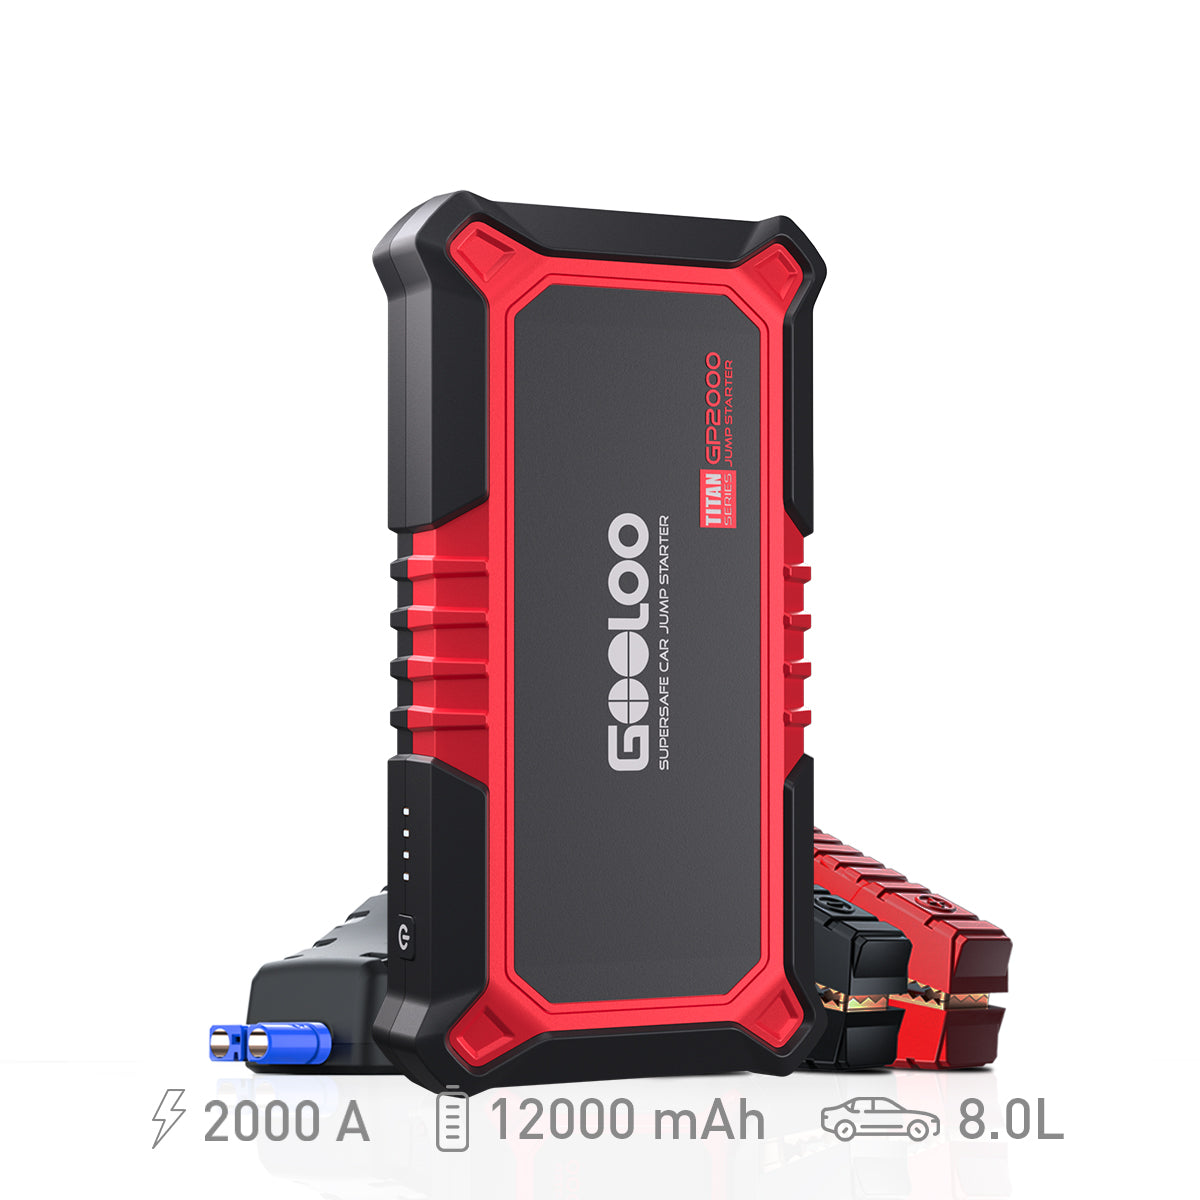 GooLoo GP2000 Jump Starter/Power Bank Kit Review! 